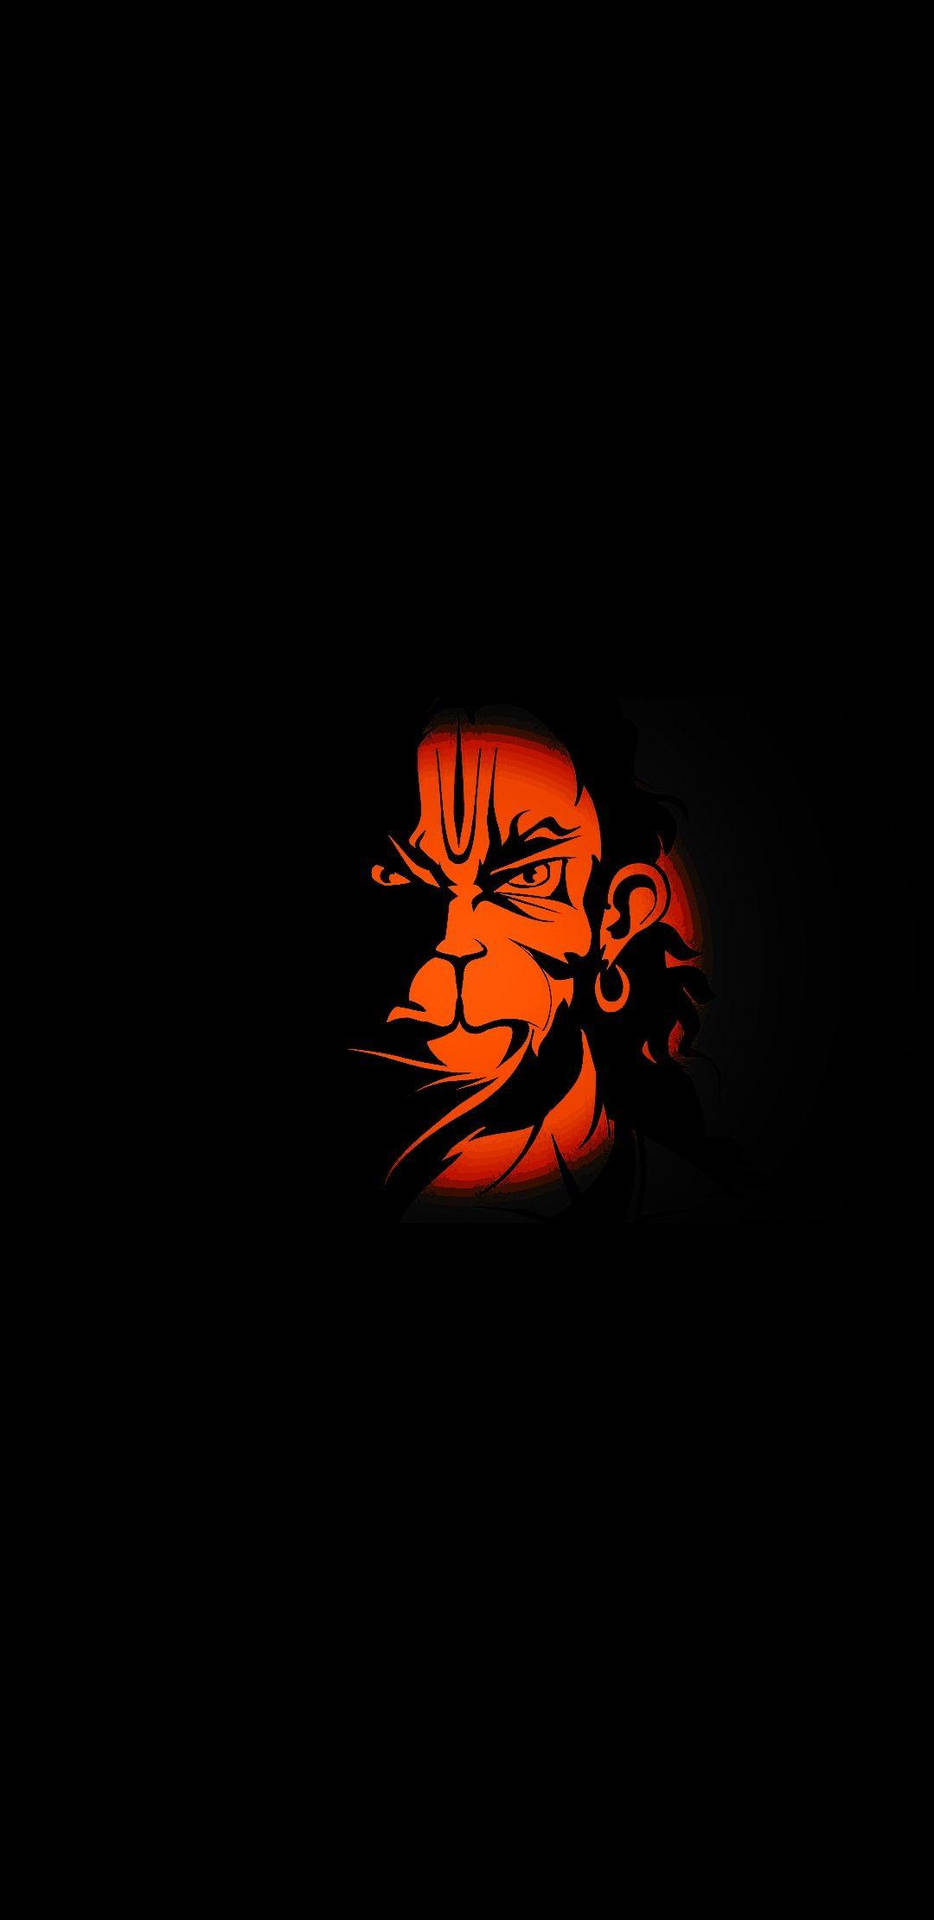 Free Hanuman 4k Hd Wallpaper Downloads, [100+] Hanuman 4k Hd Wallpapers for  FREE 